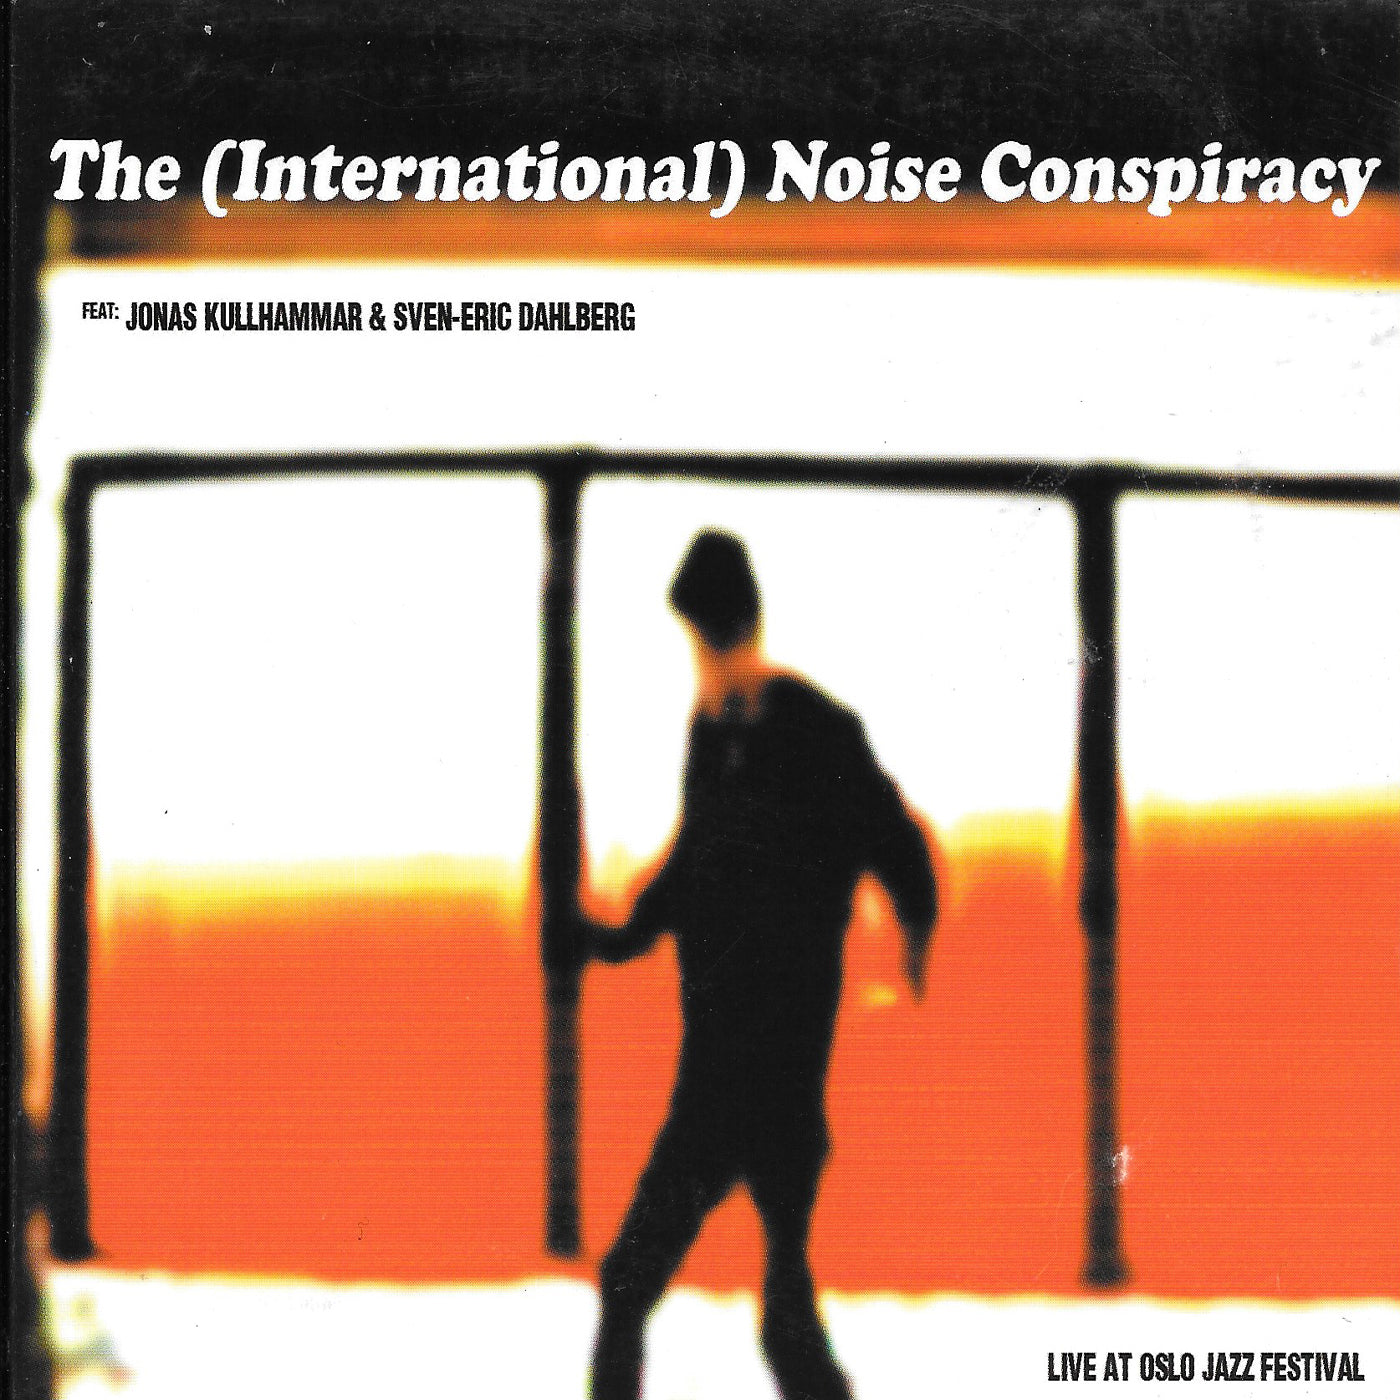 v374 - The (International) Noise Conspiracy Featuring Jonas Kullhammar & Sven-Eric Dahlberg - "Live At Oslo Jazz Festival"